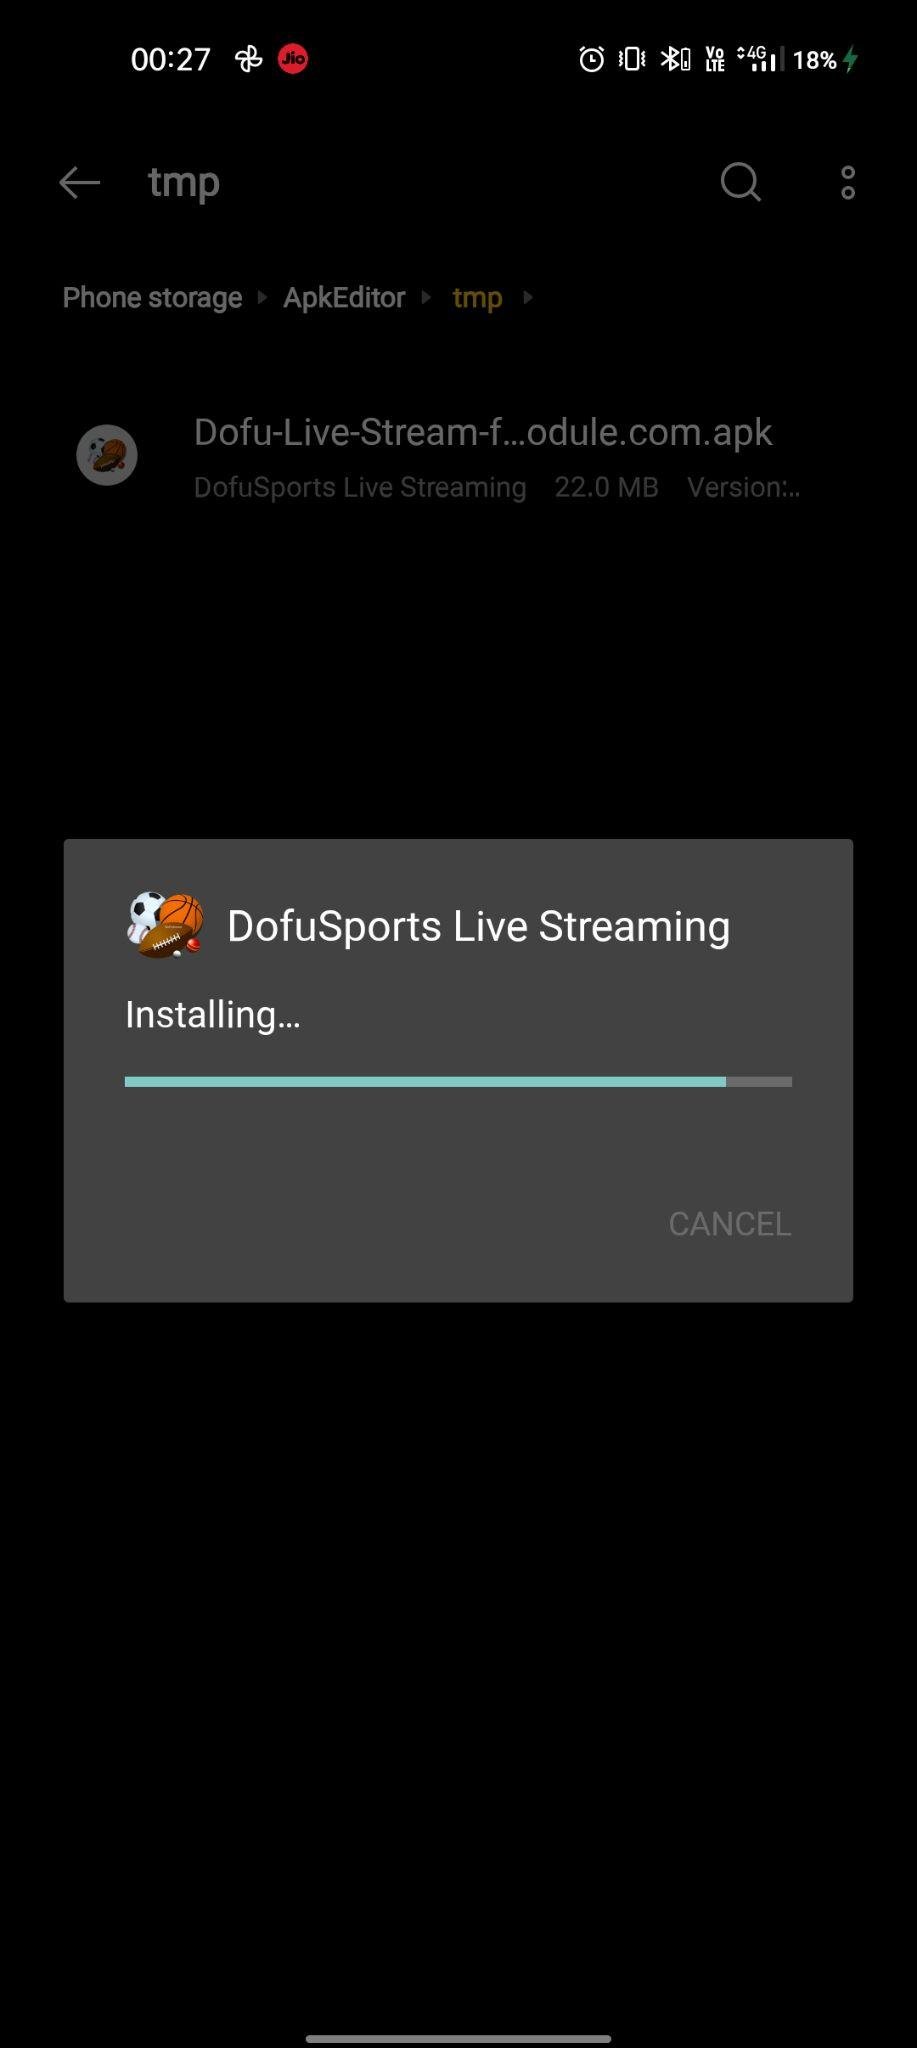 DofuSports apk installing